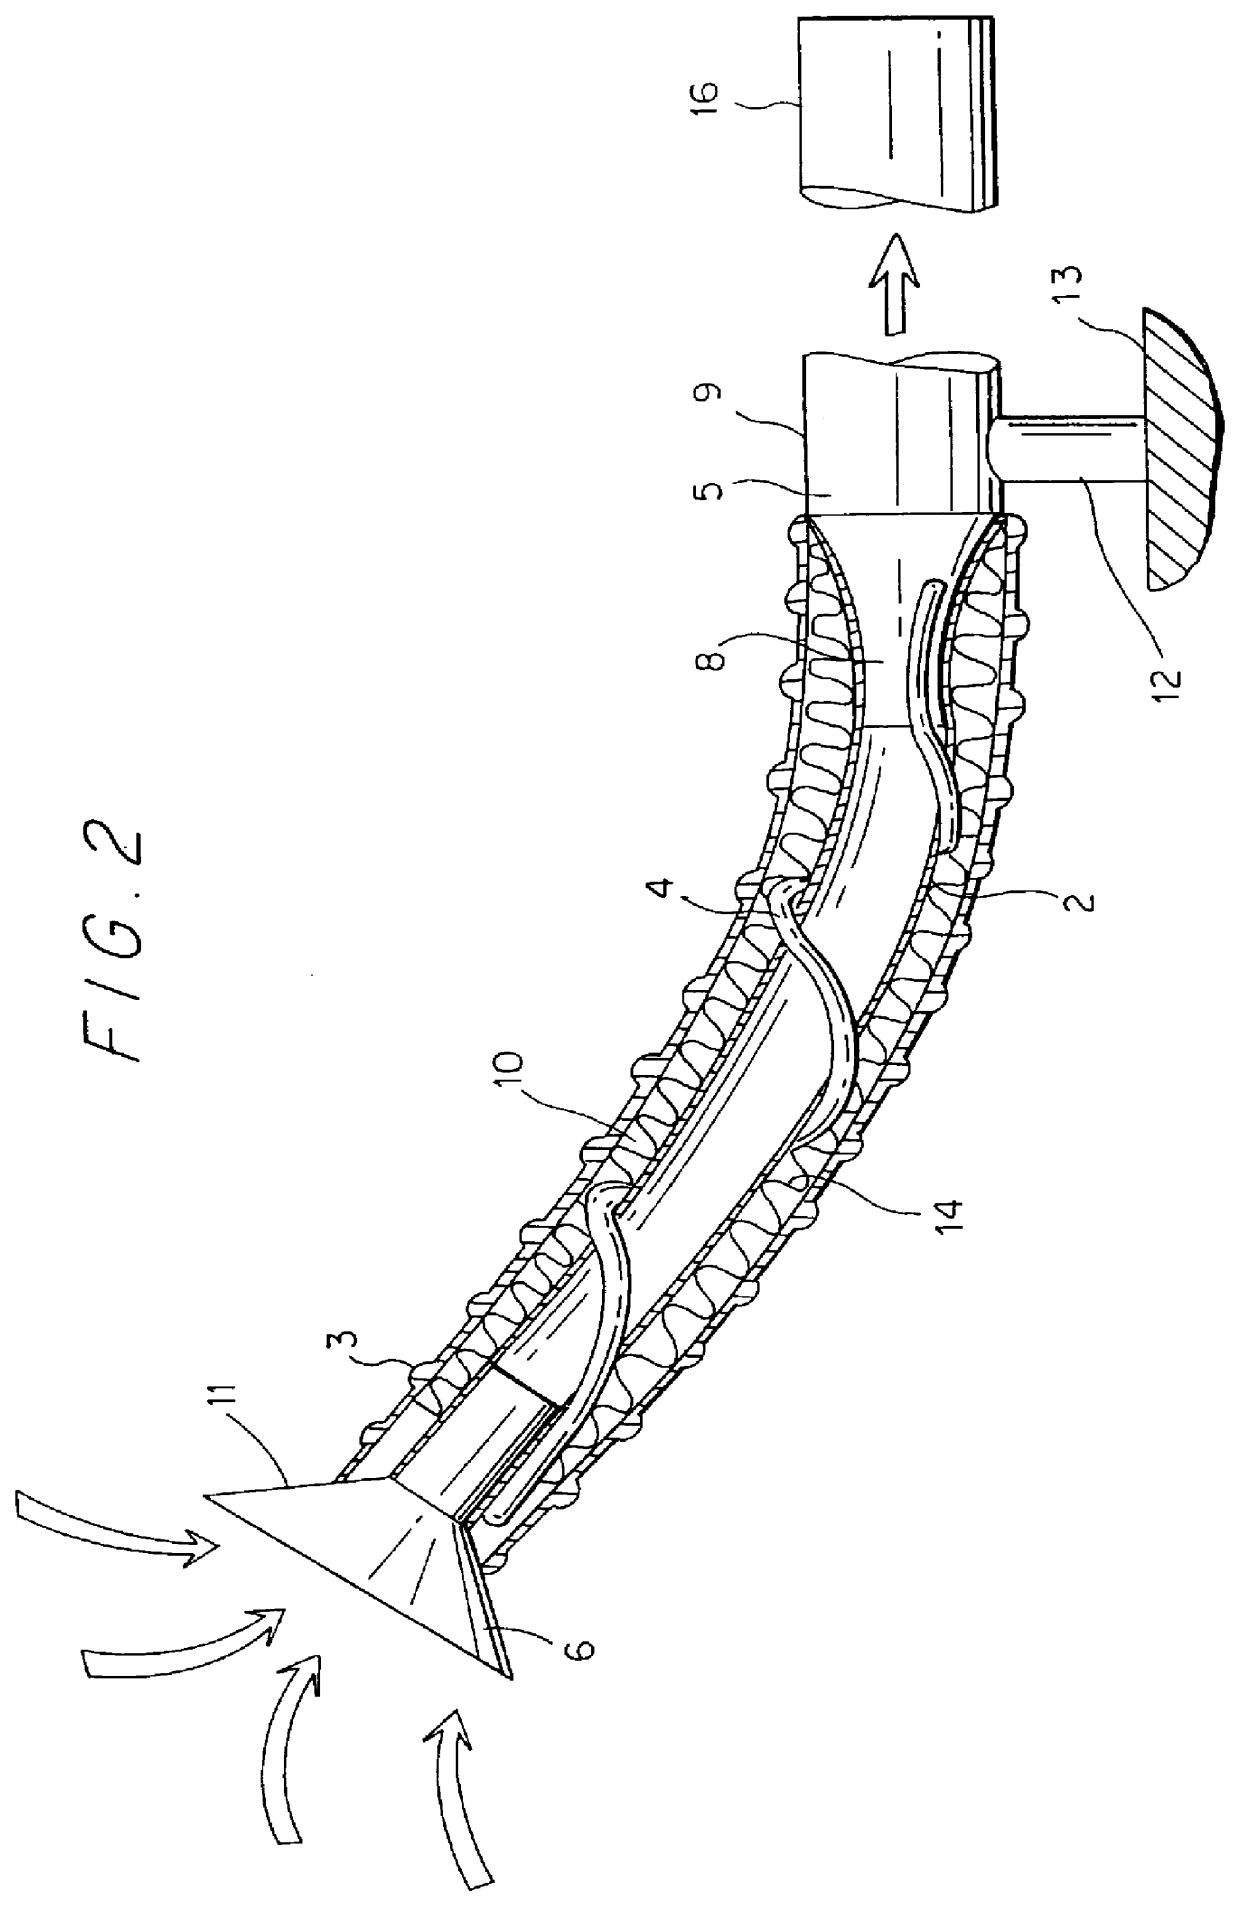 Flexible tube device